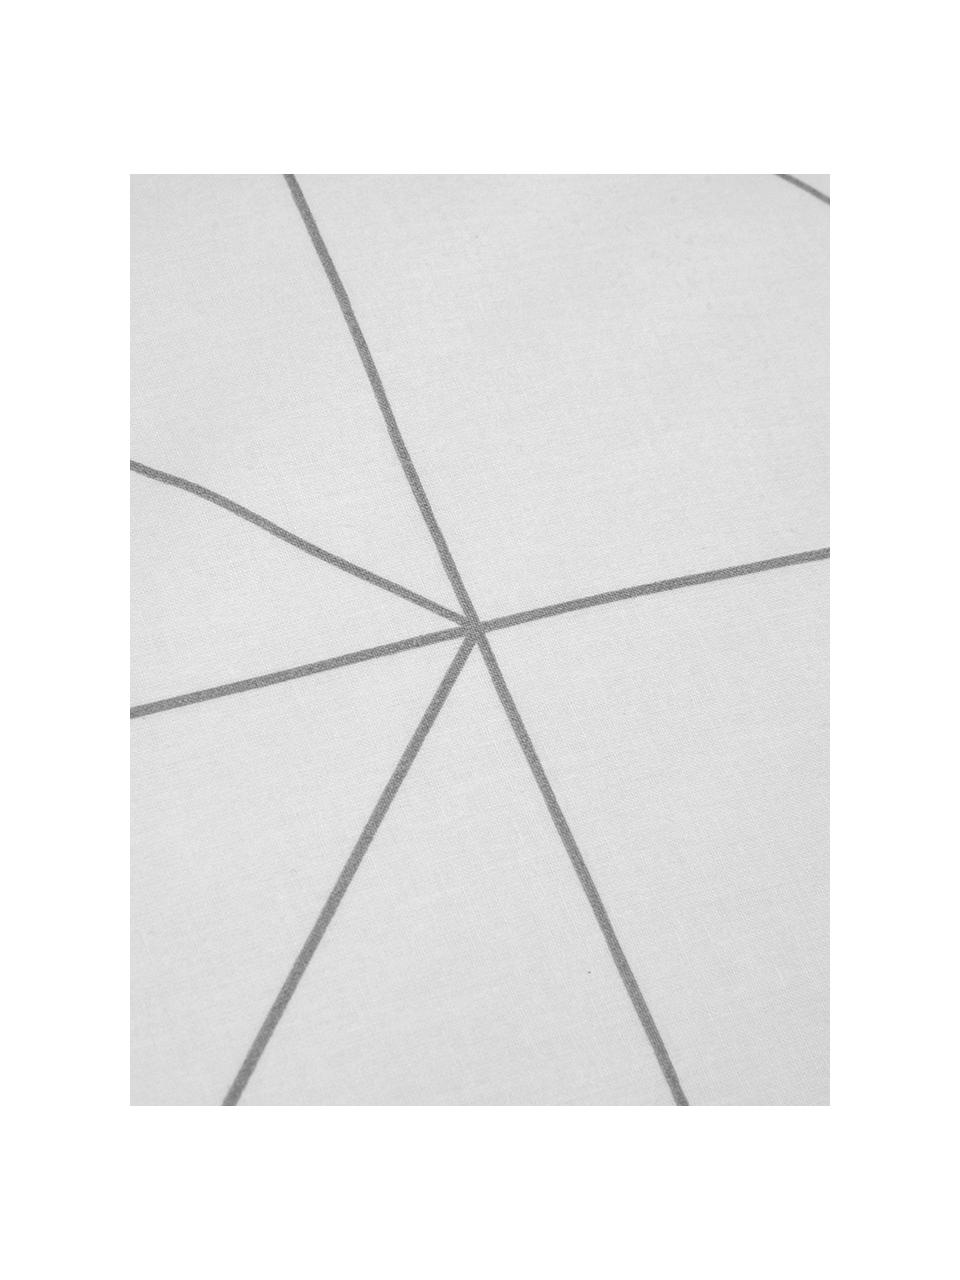 Dwustronna poszewka na poduszkę z bawełny Marla, 2 szt., Szary, biały, S 40 x D 80 cm